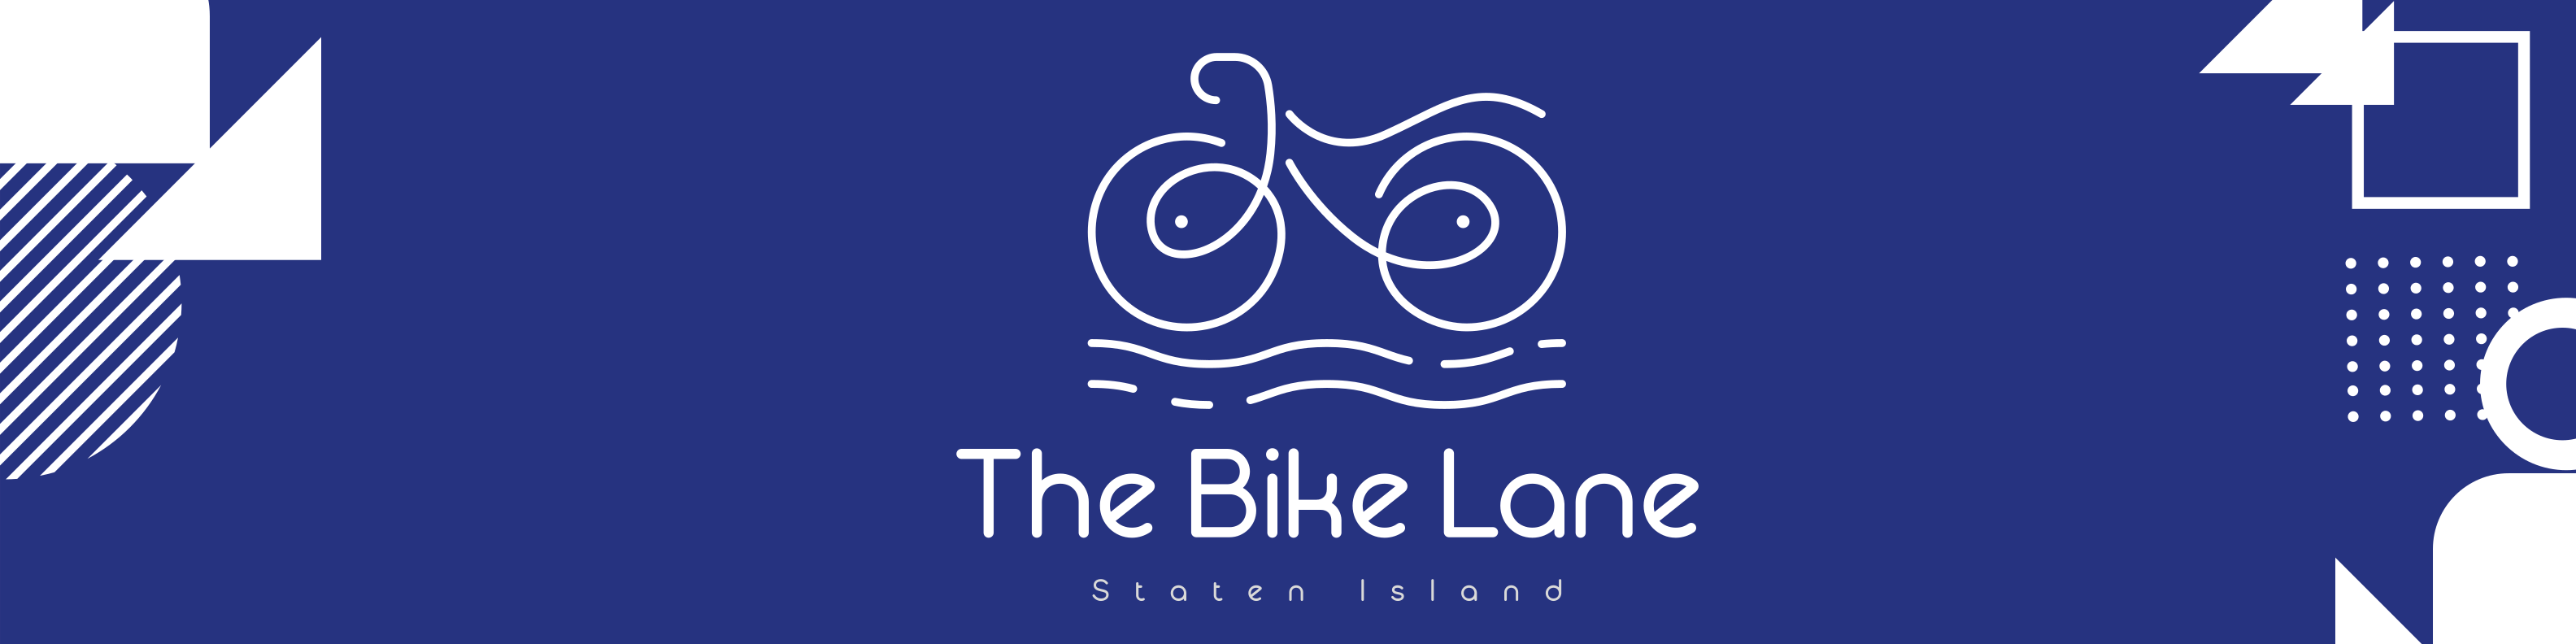 The Bike Lane Home Page